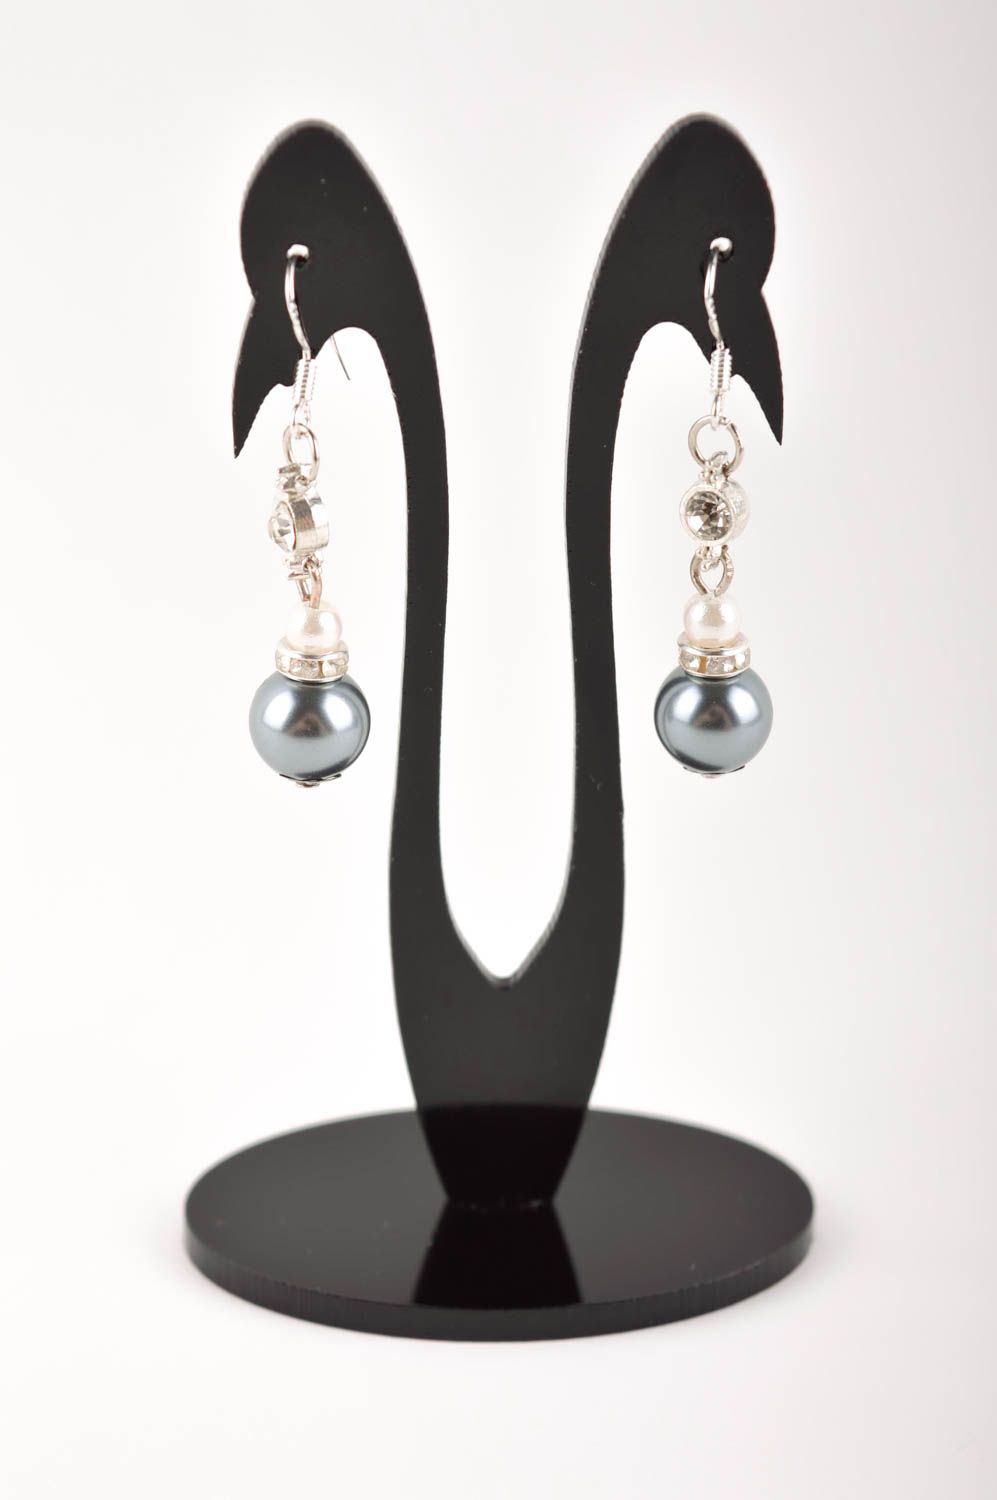 Handmade earrings with charms stylish earrings designer jewelry women accessory photo 2